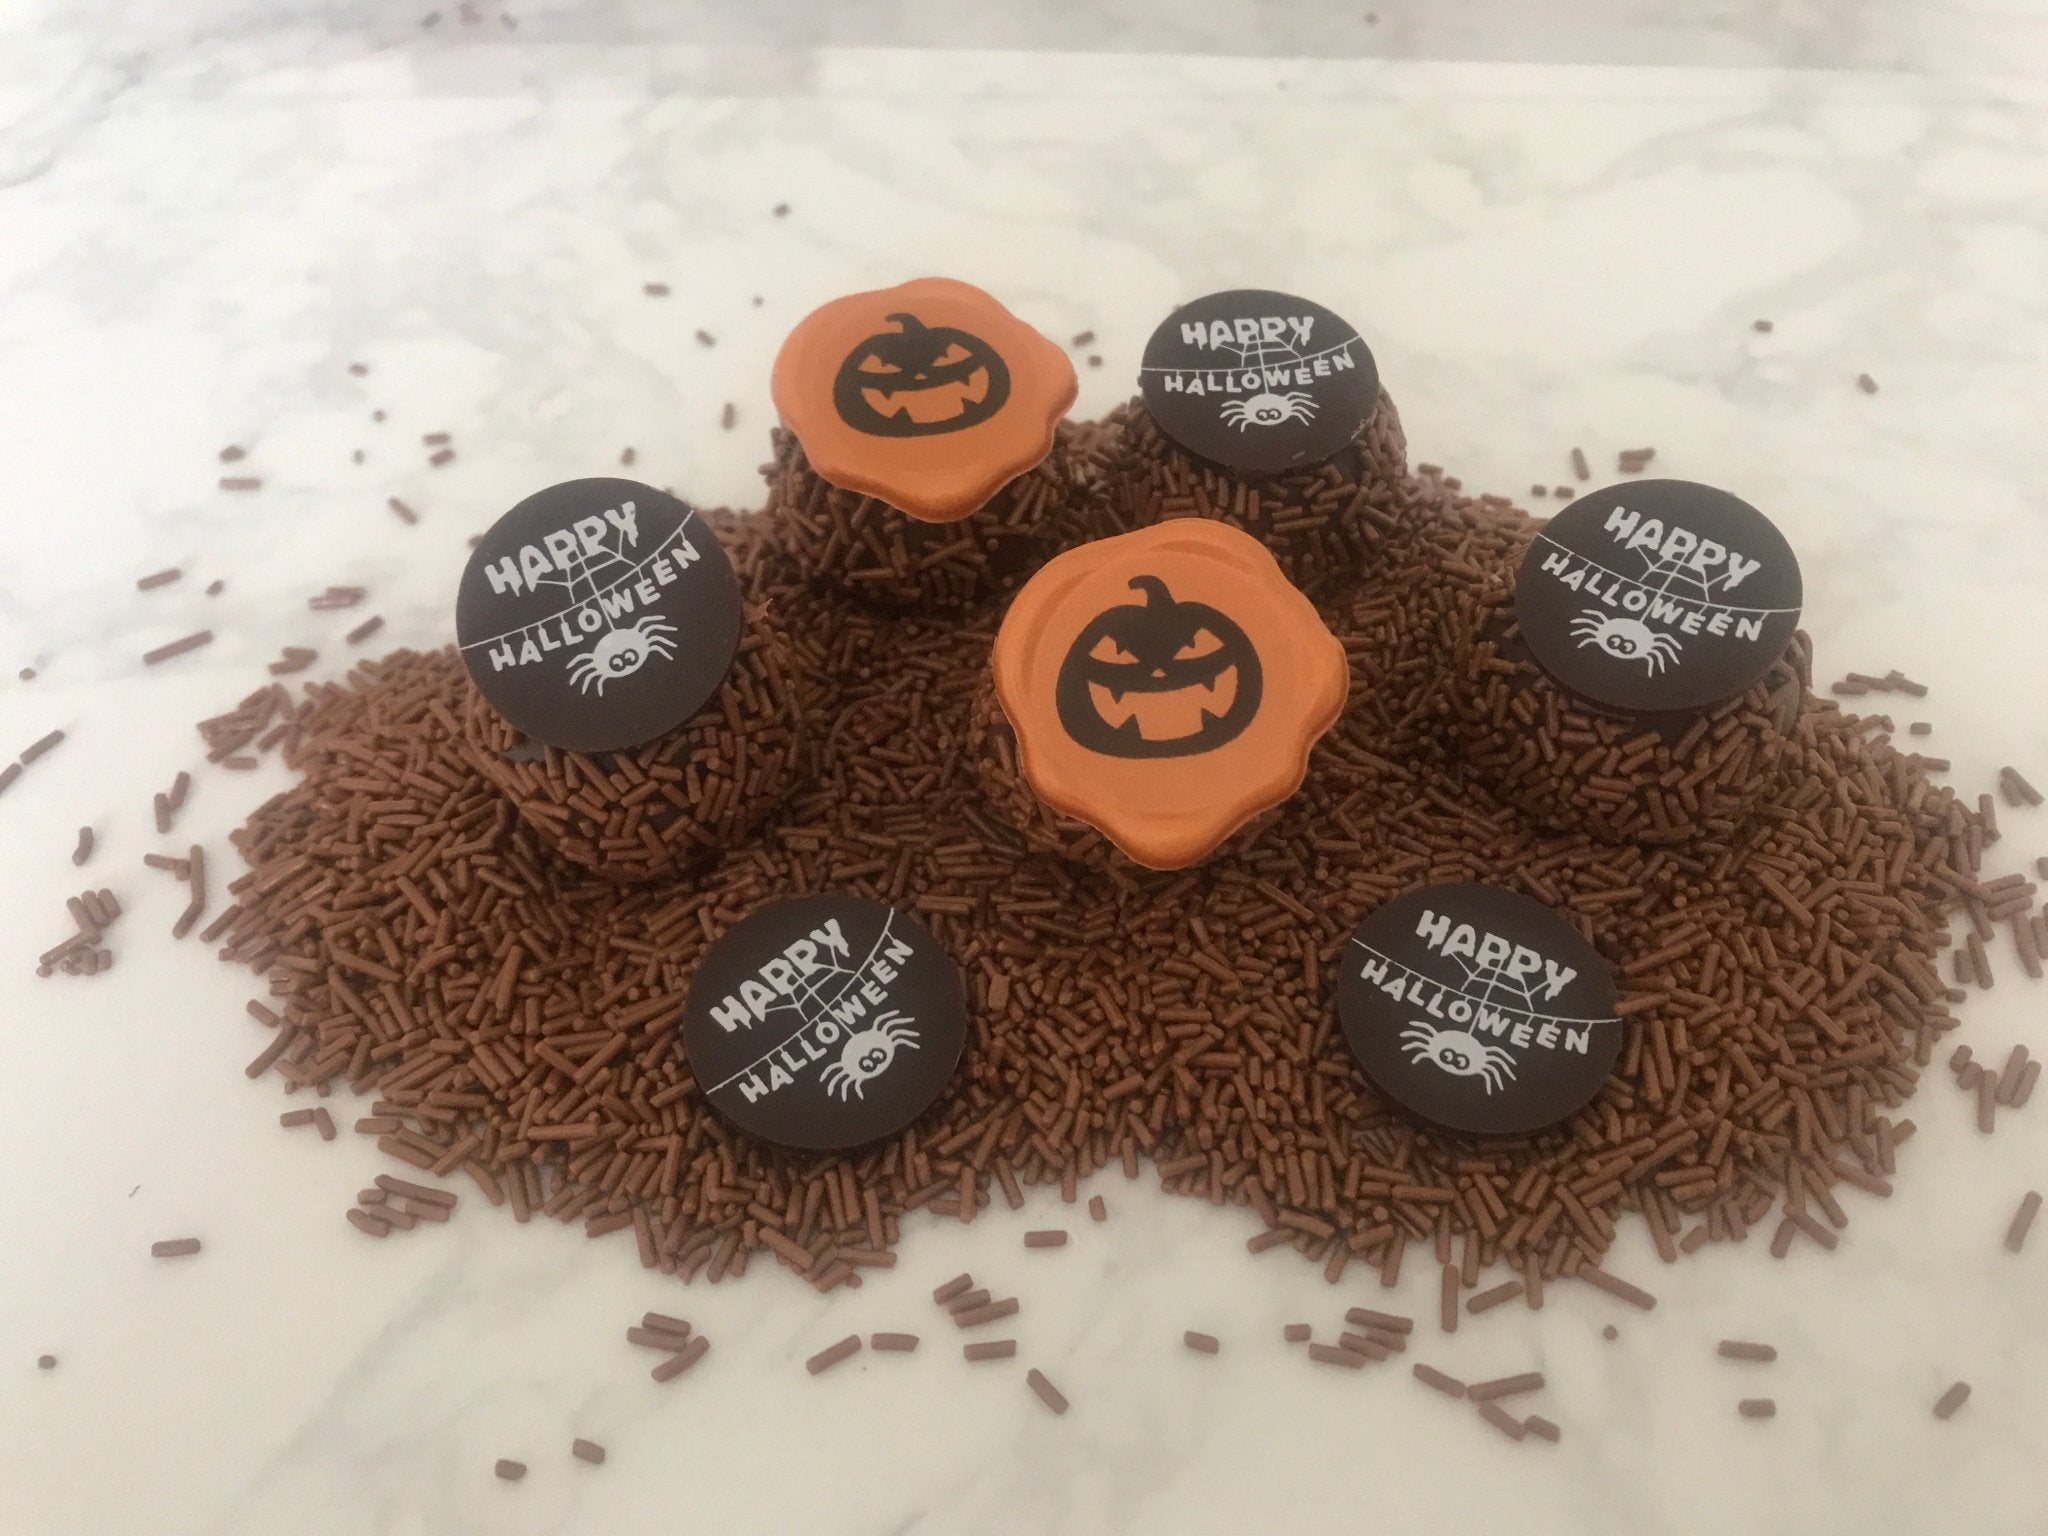 Luxury Gluten-free Halloween Chocolates from Bossa Nova Chocolate